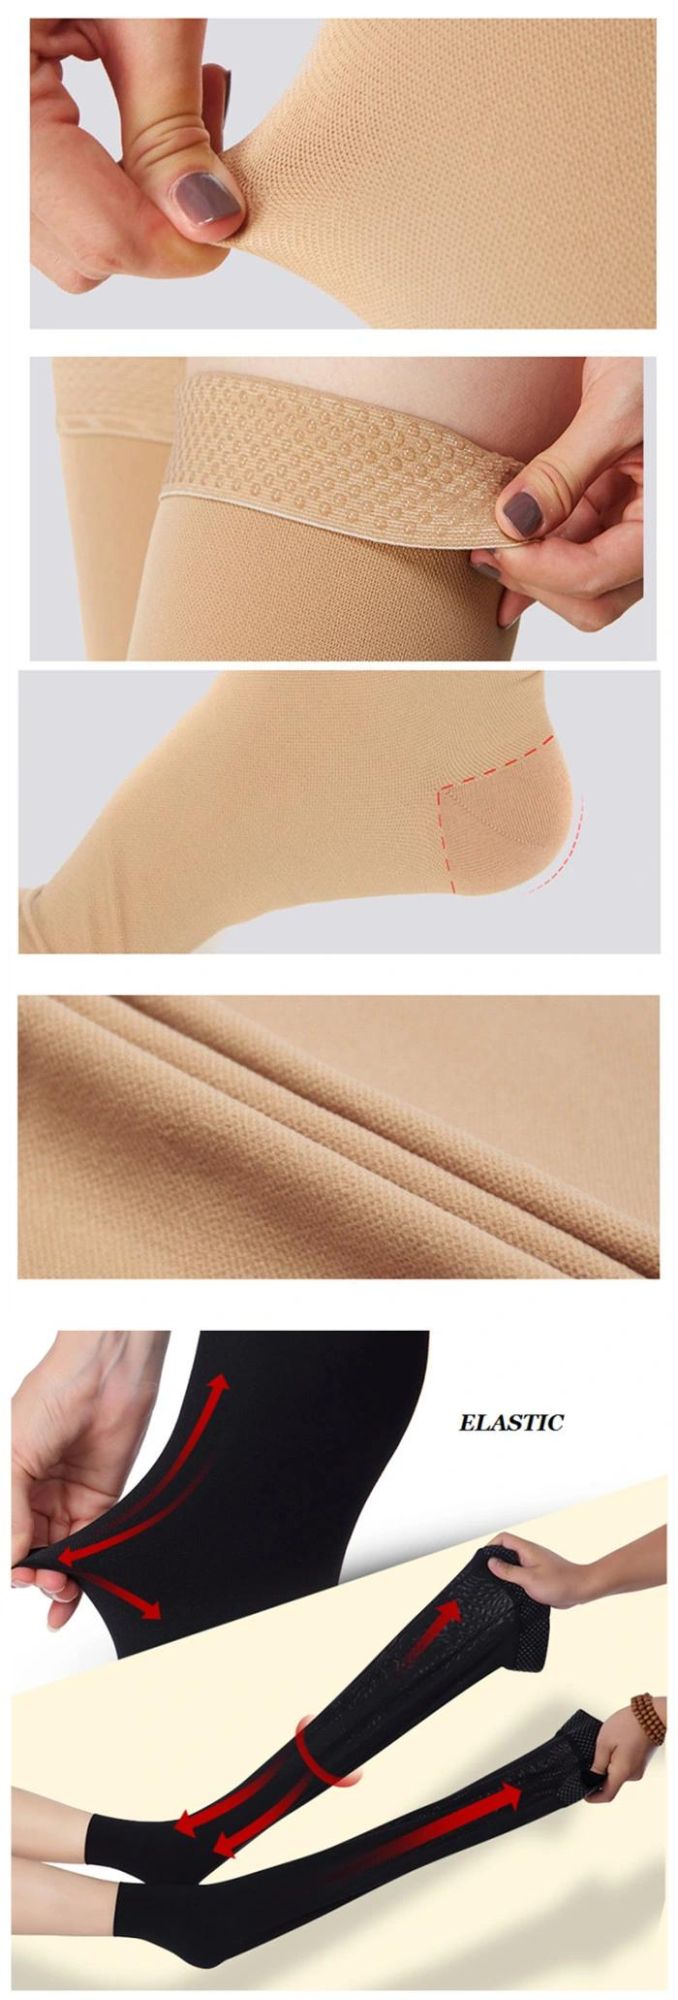 High Quality Anti-Slip Thigh High Wrap Toe 23-32mmhg Compression Medical Socks